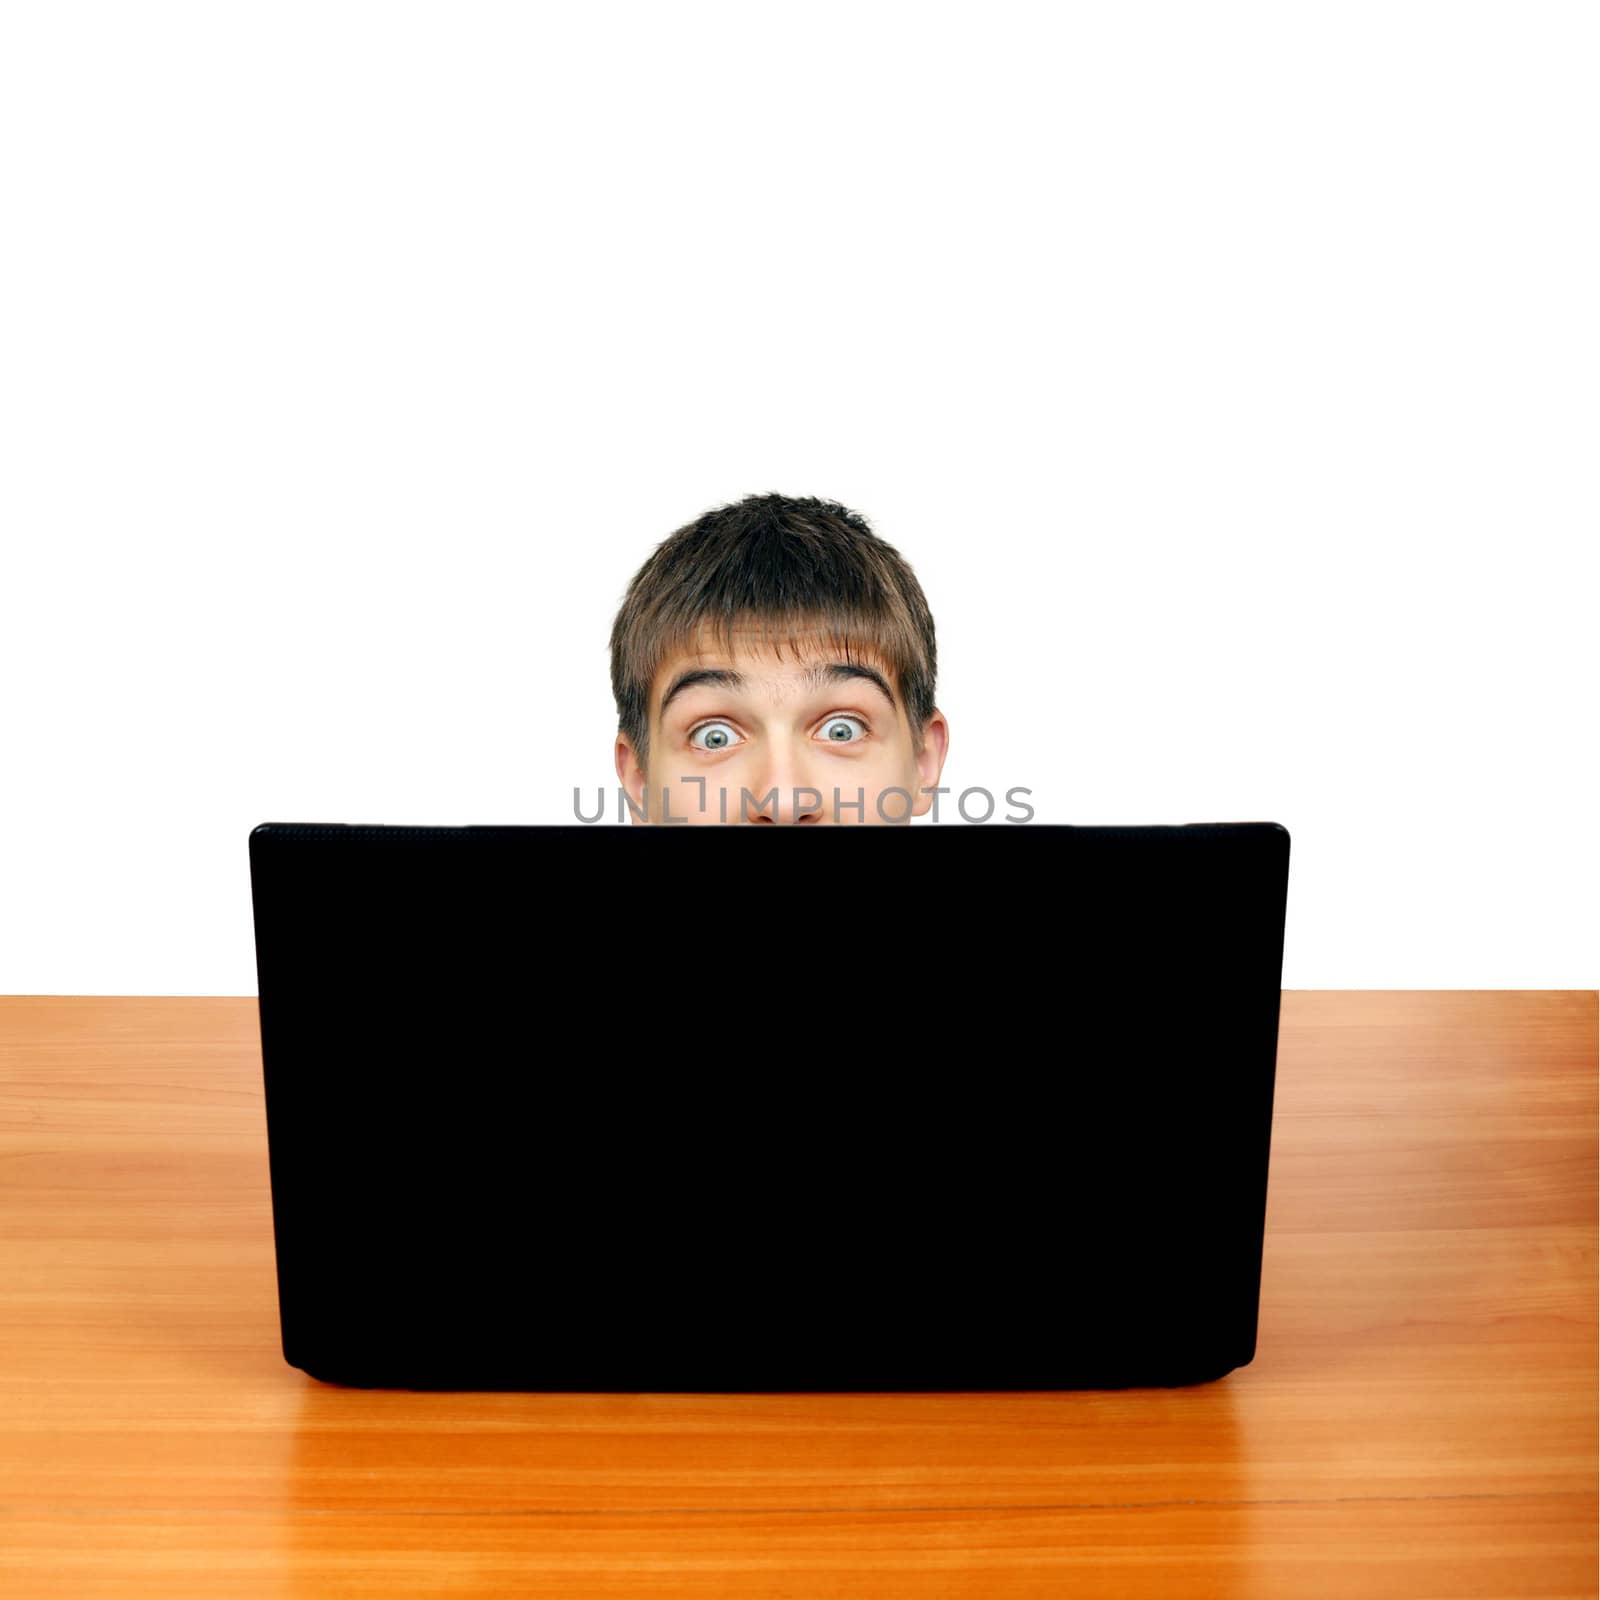 Surprised Teenager behind Laptop by sabphoto